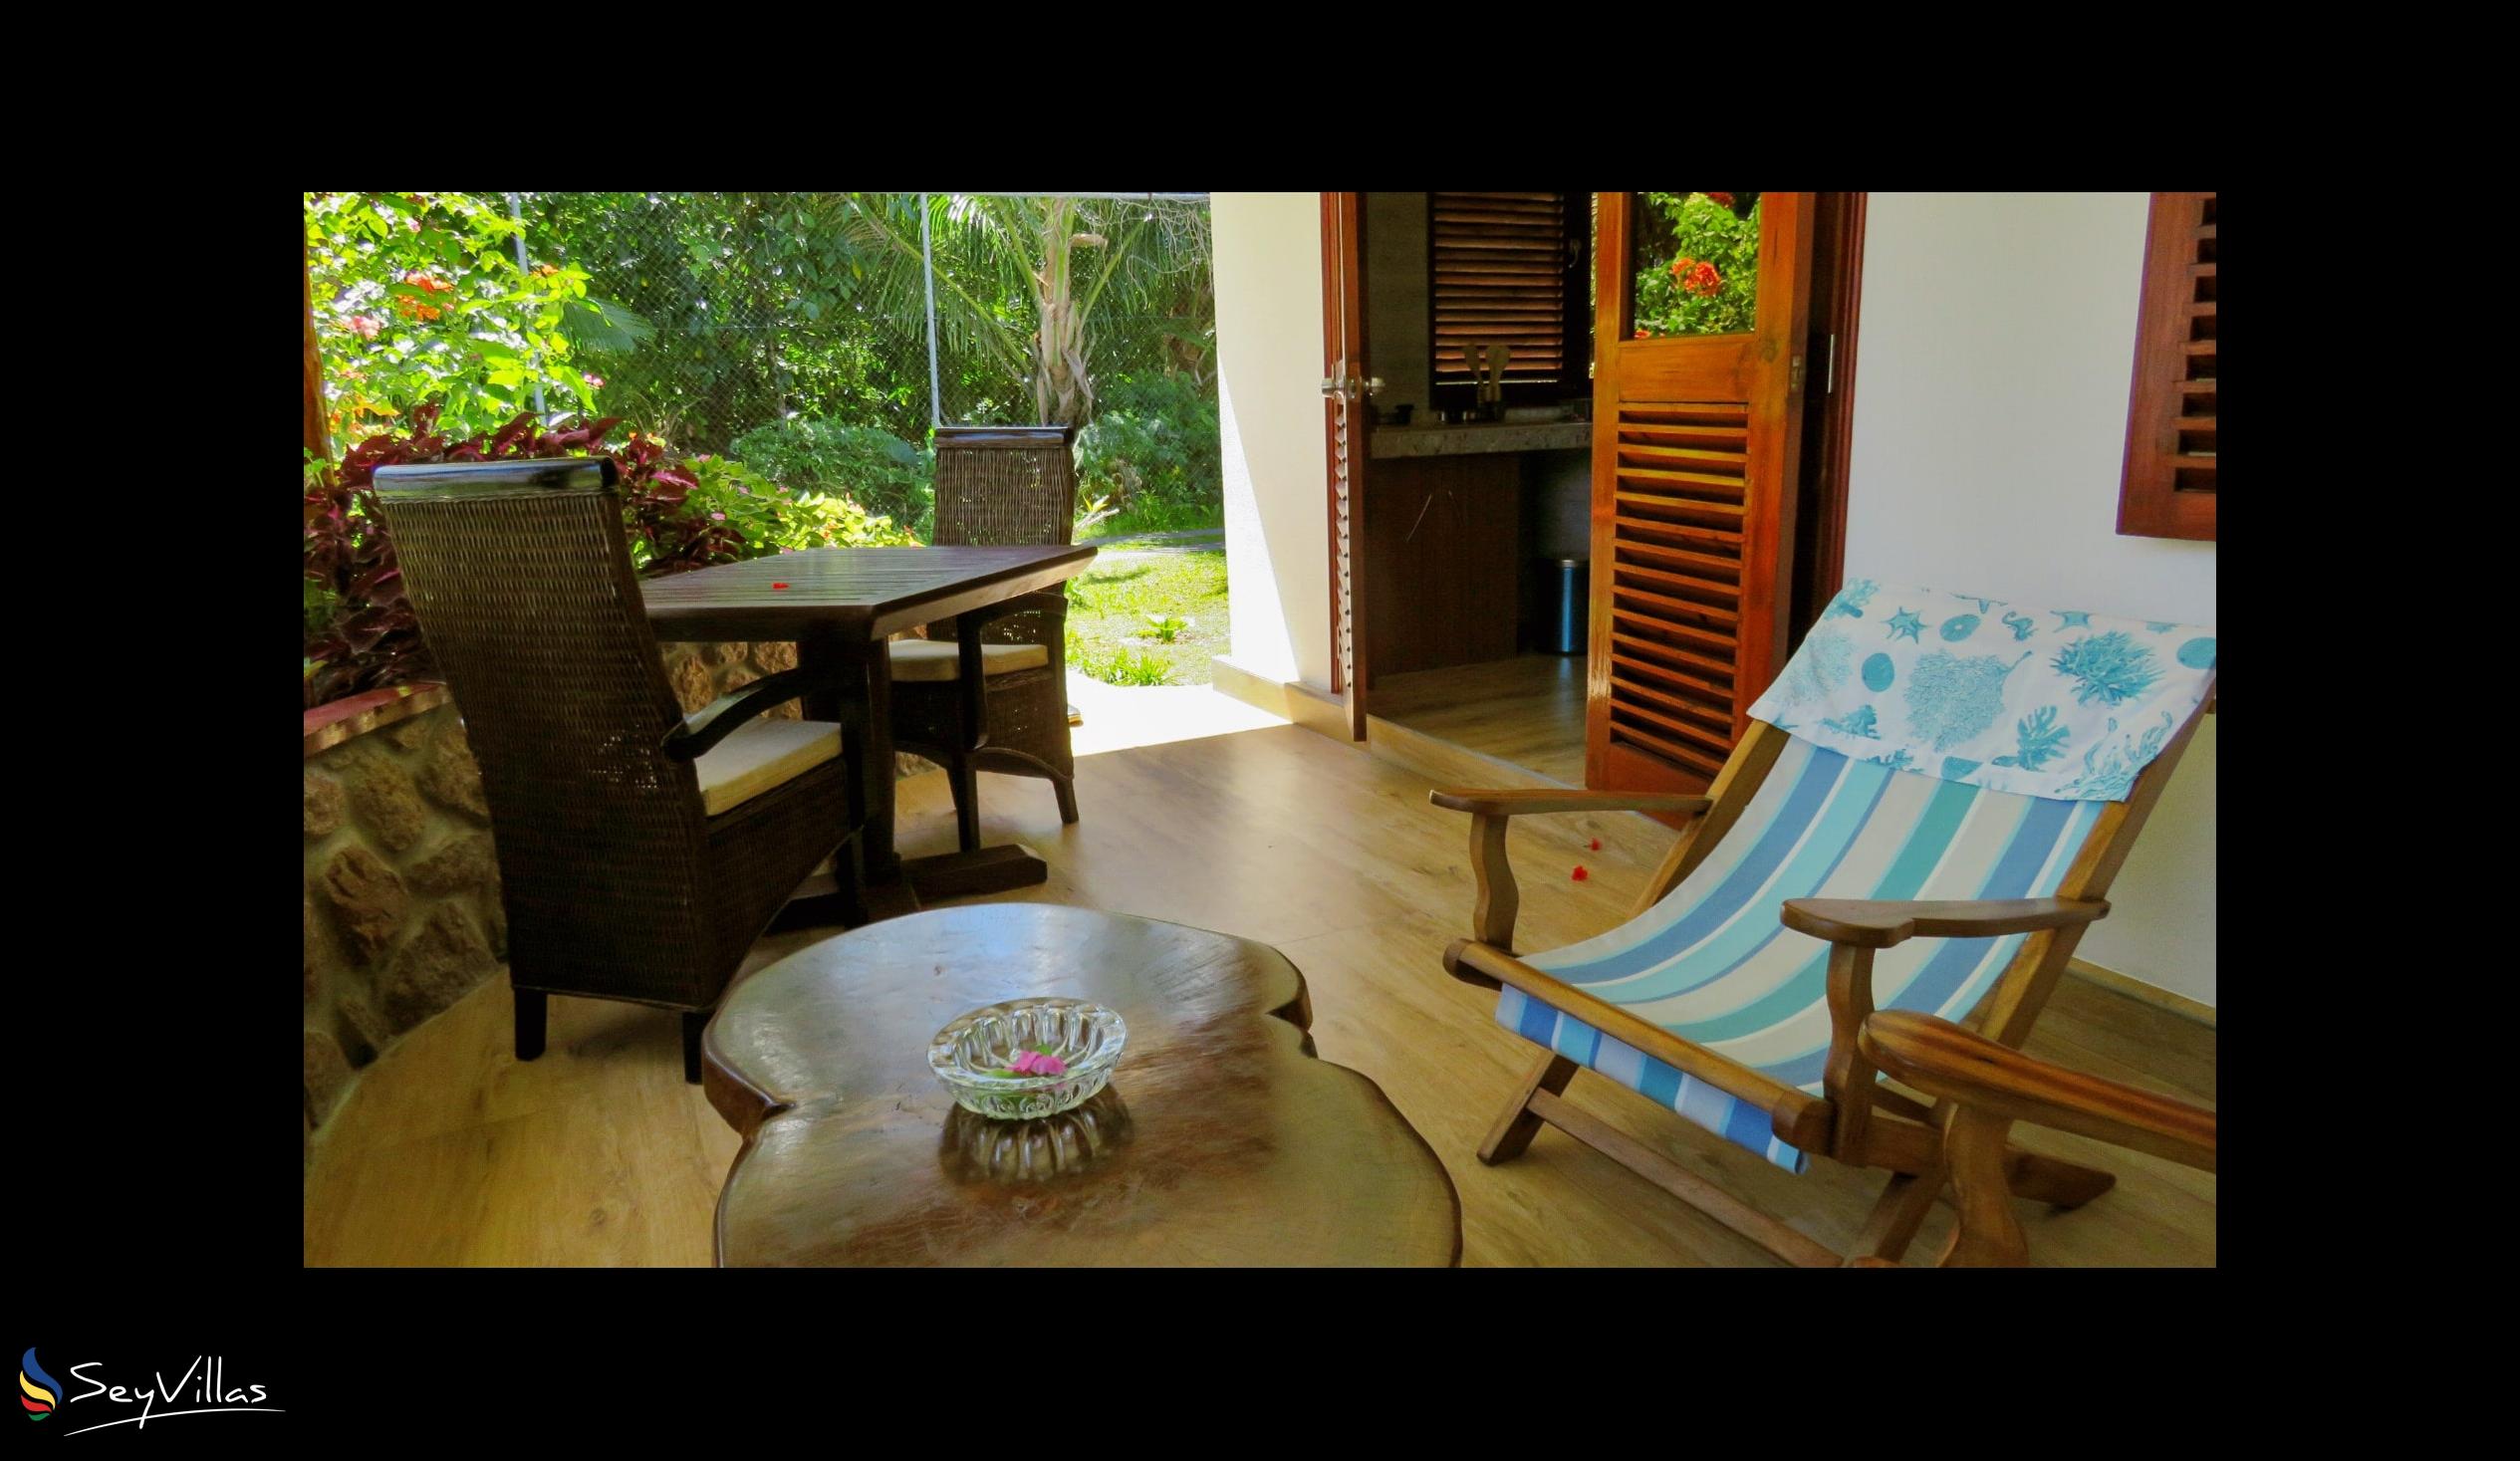 Photo 74: Islander - Deluxe Apartment - Praslin (Seychelles)